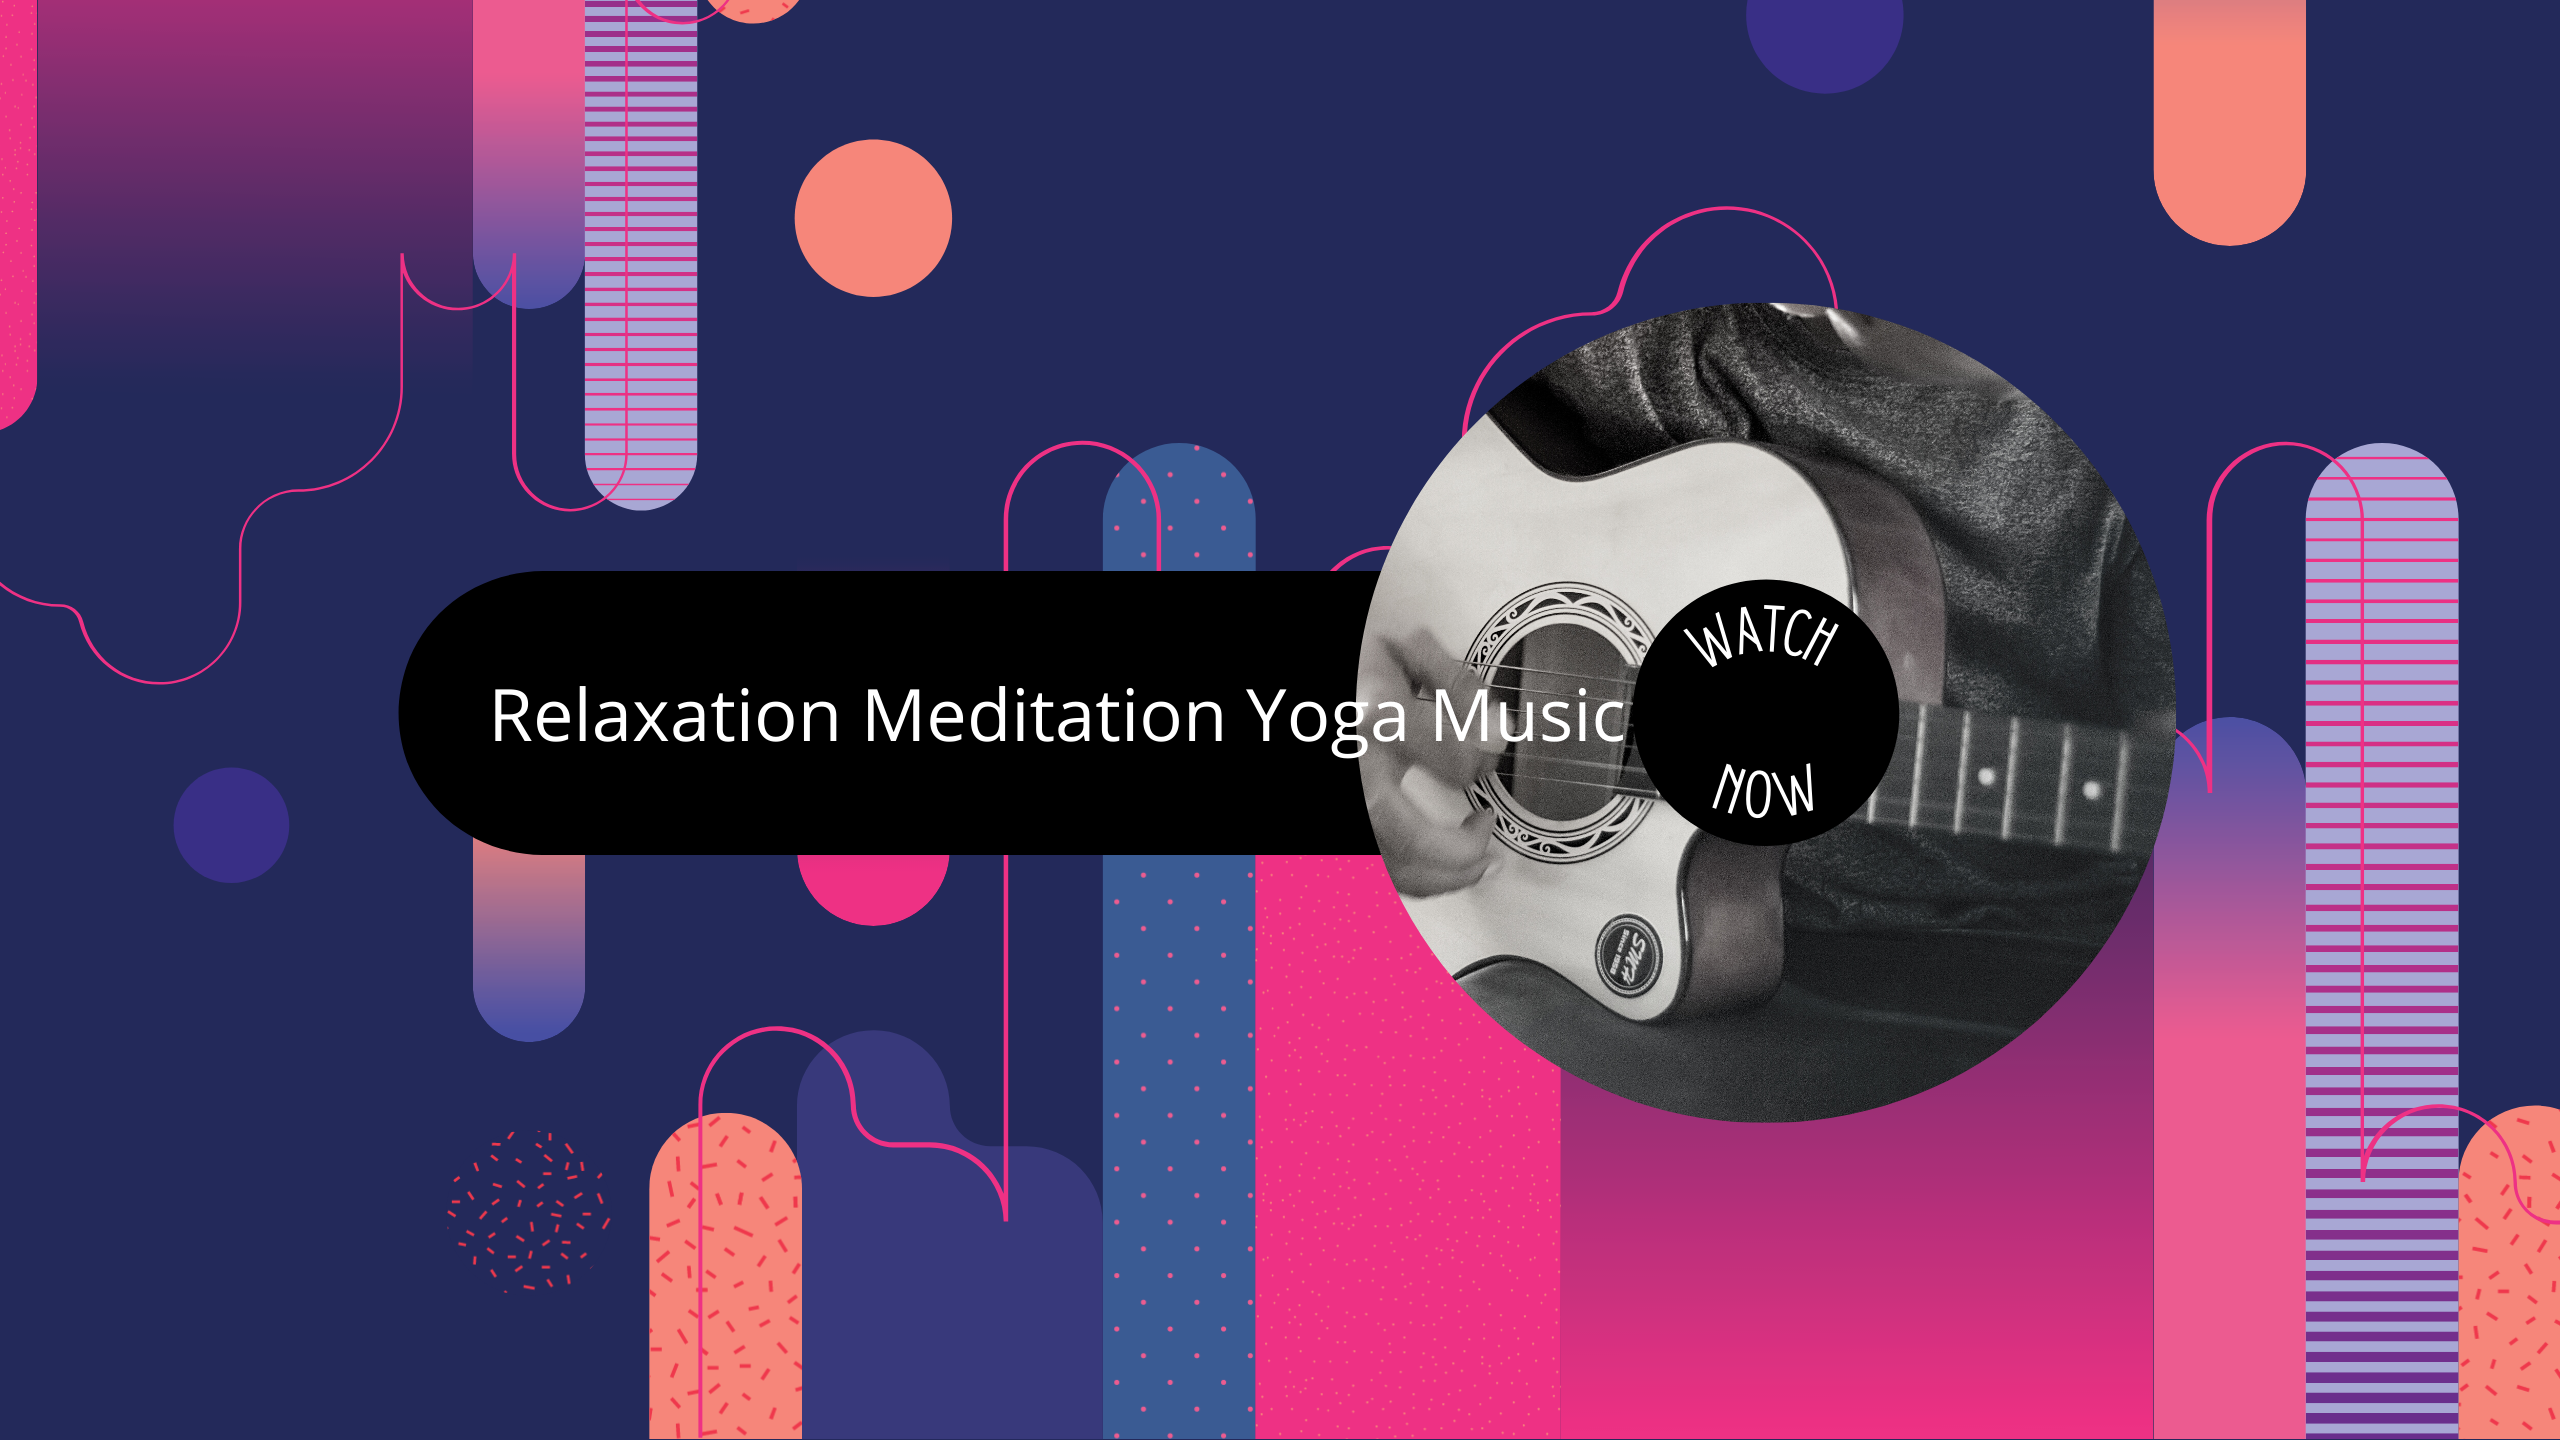 RELAXATION MEDITATION YOGA MUSIC